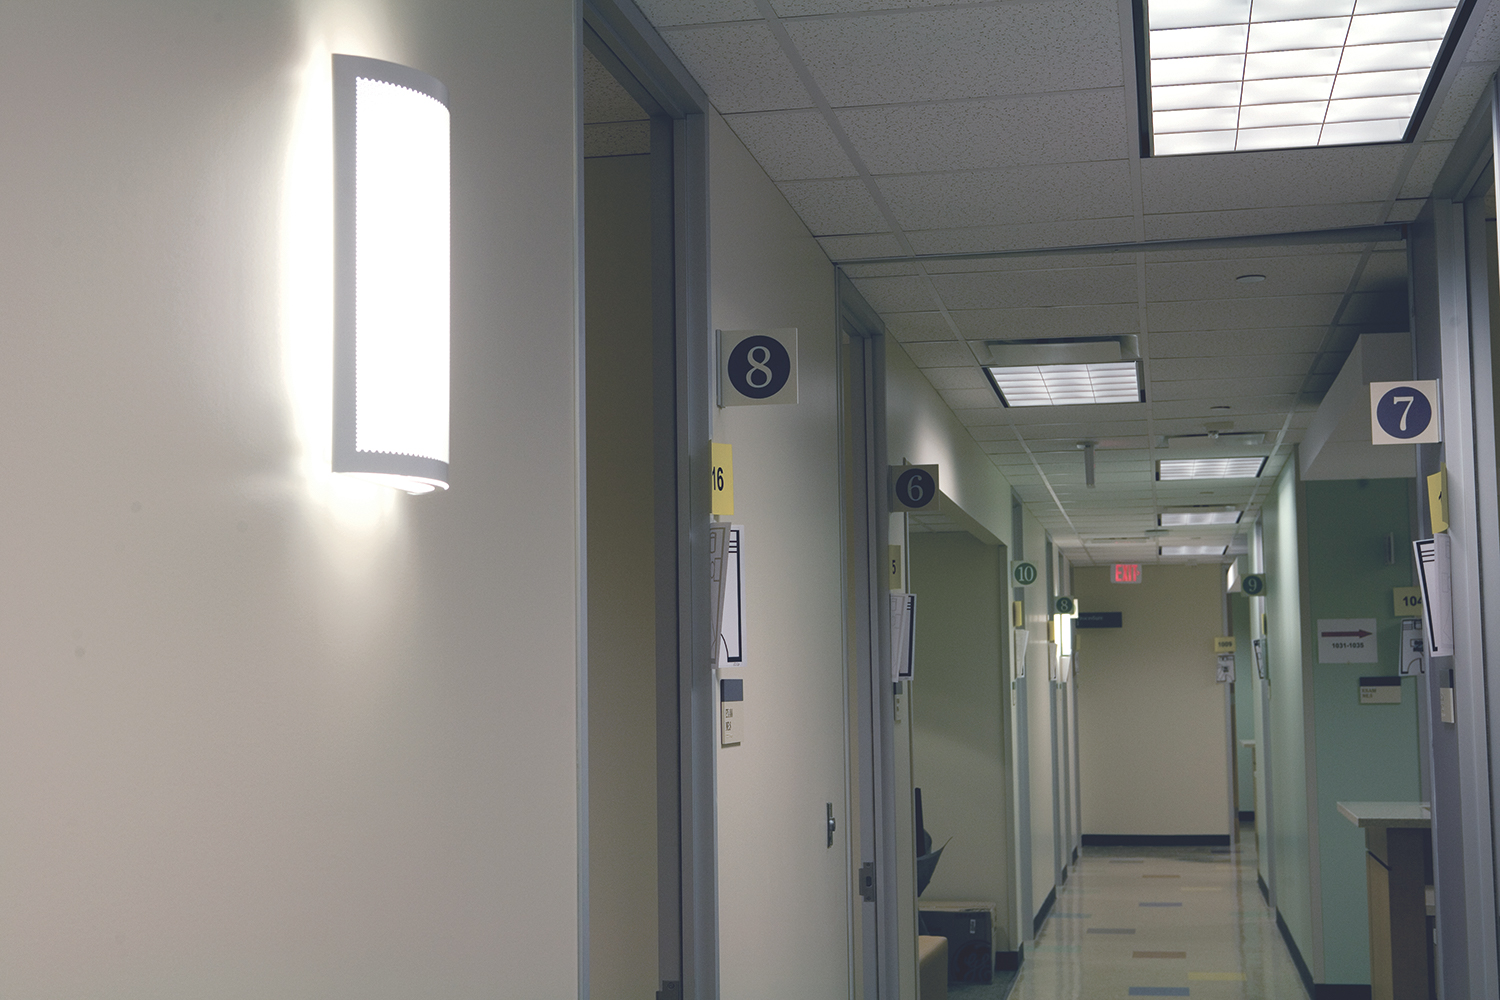 Masque modern wall sconce in a medical lighting application along a hospital corridor.